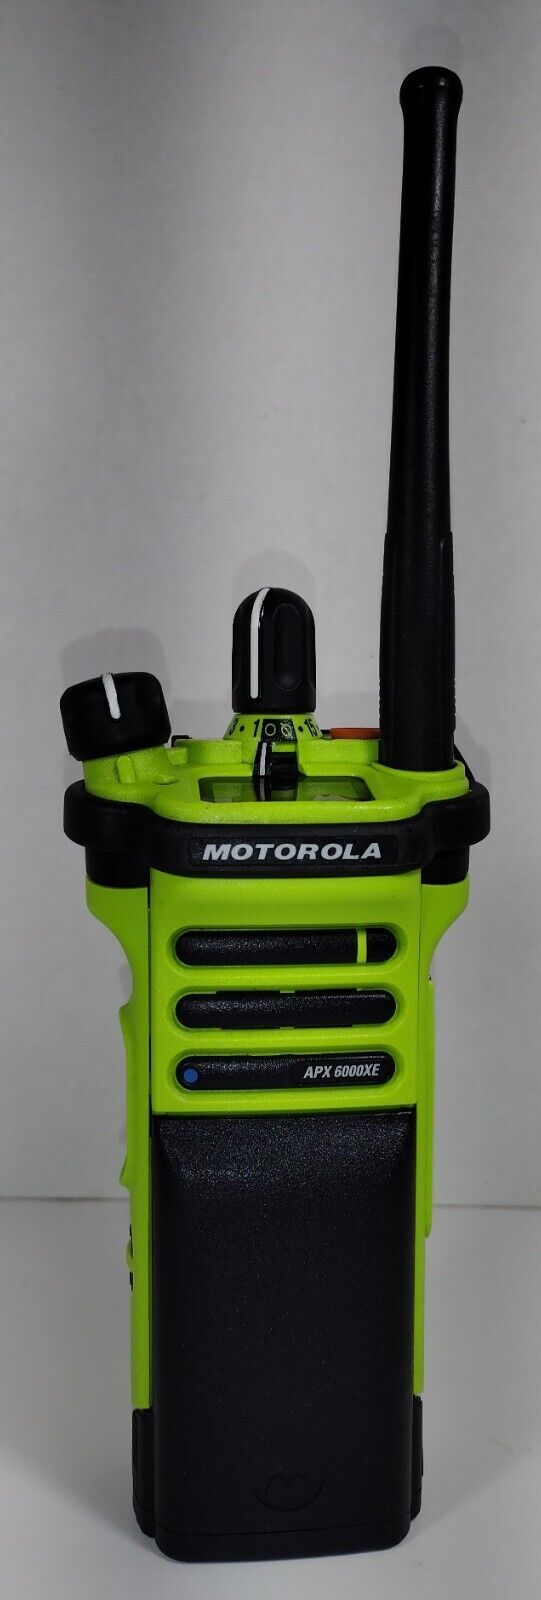 Motorola APX 6000XE 1.5 Extreme UHF Digital Two Way Radio P25 TDMA 450-520 MHz